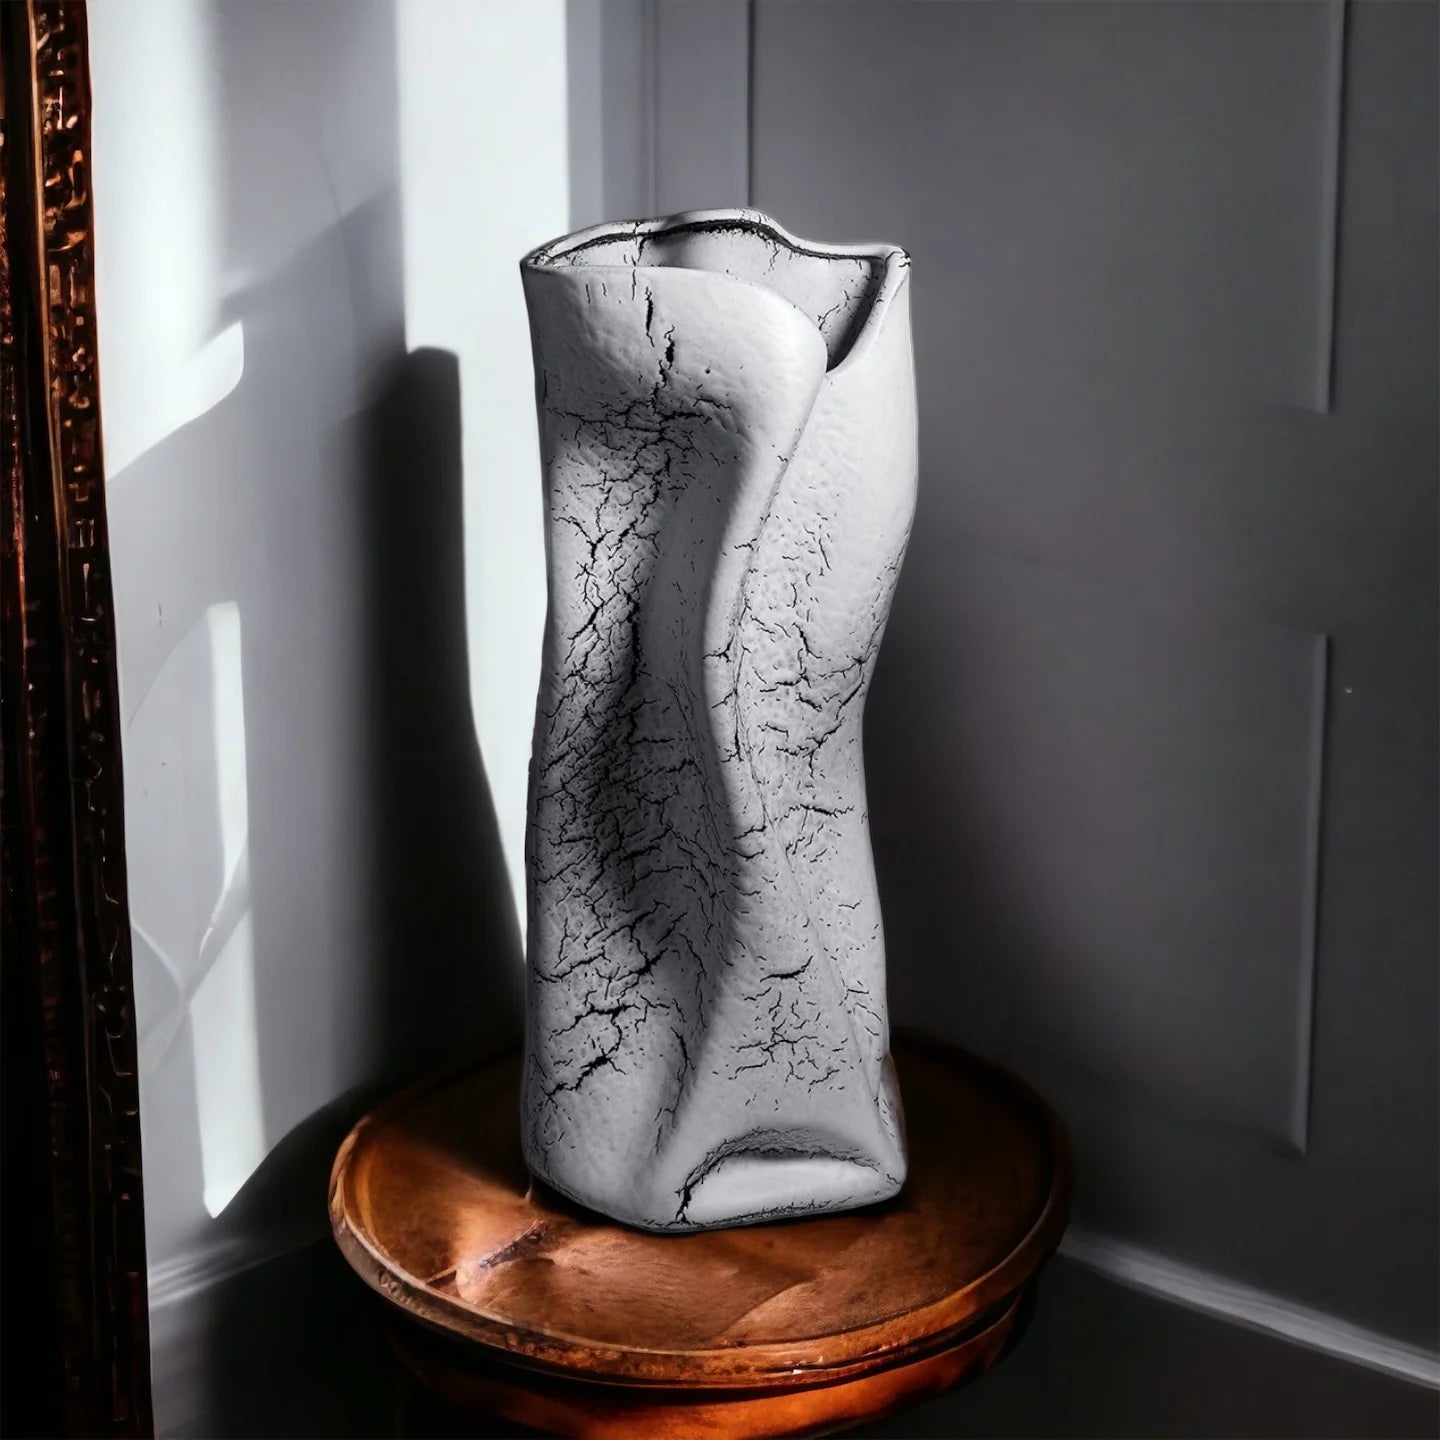 The Nebulous Vase